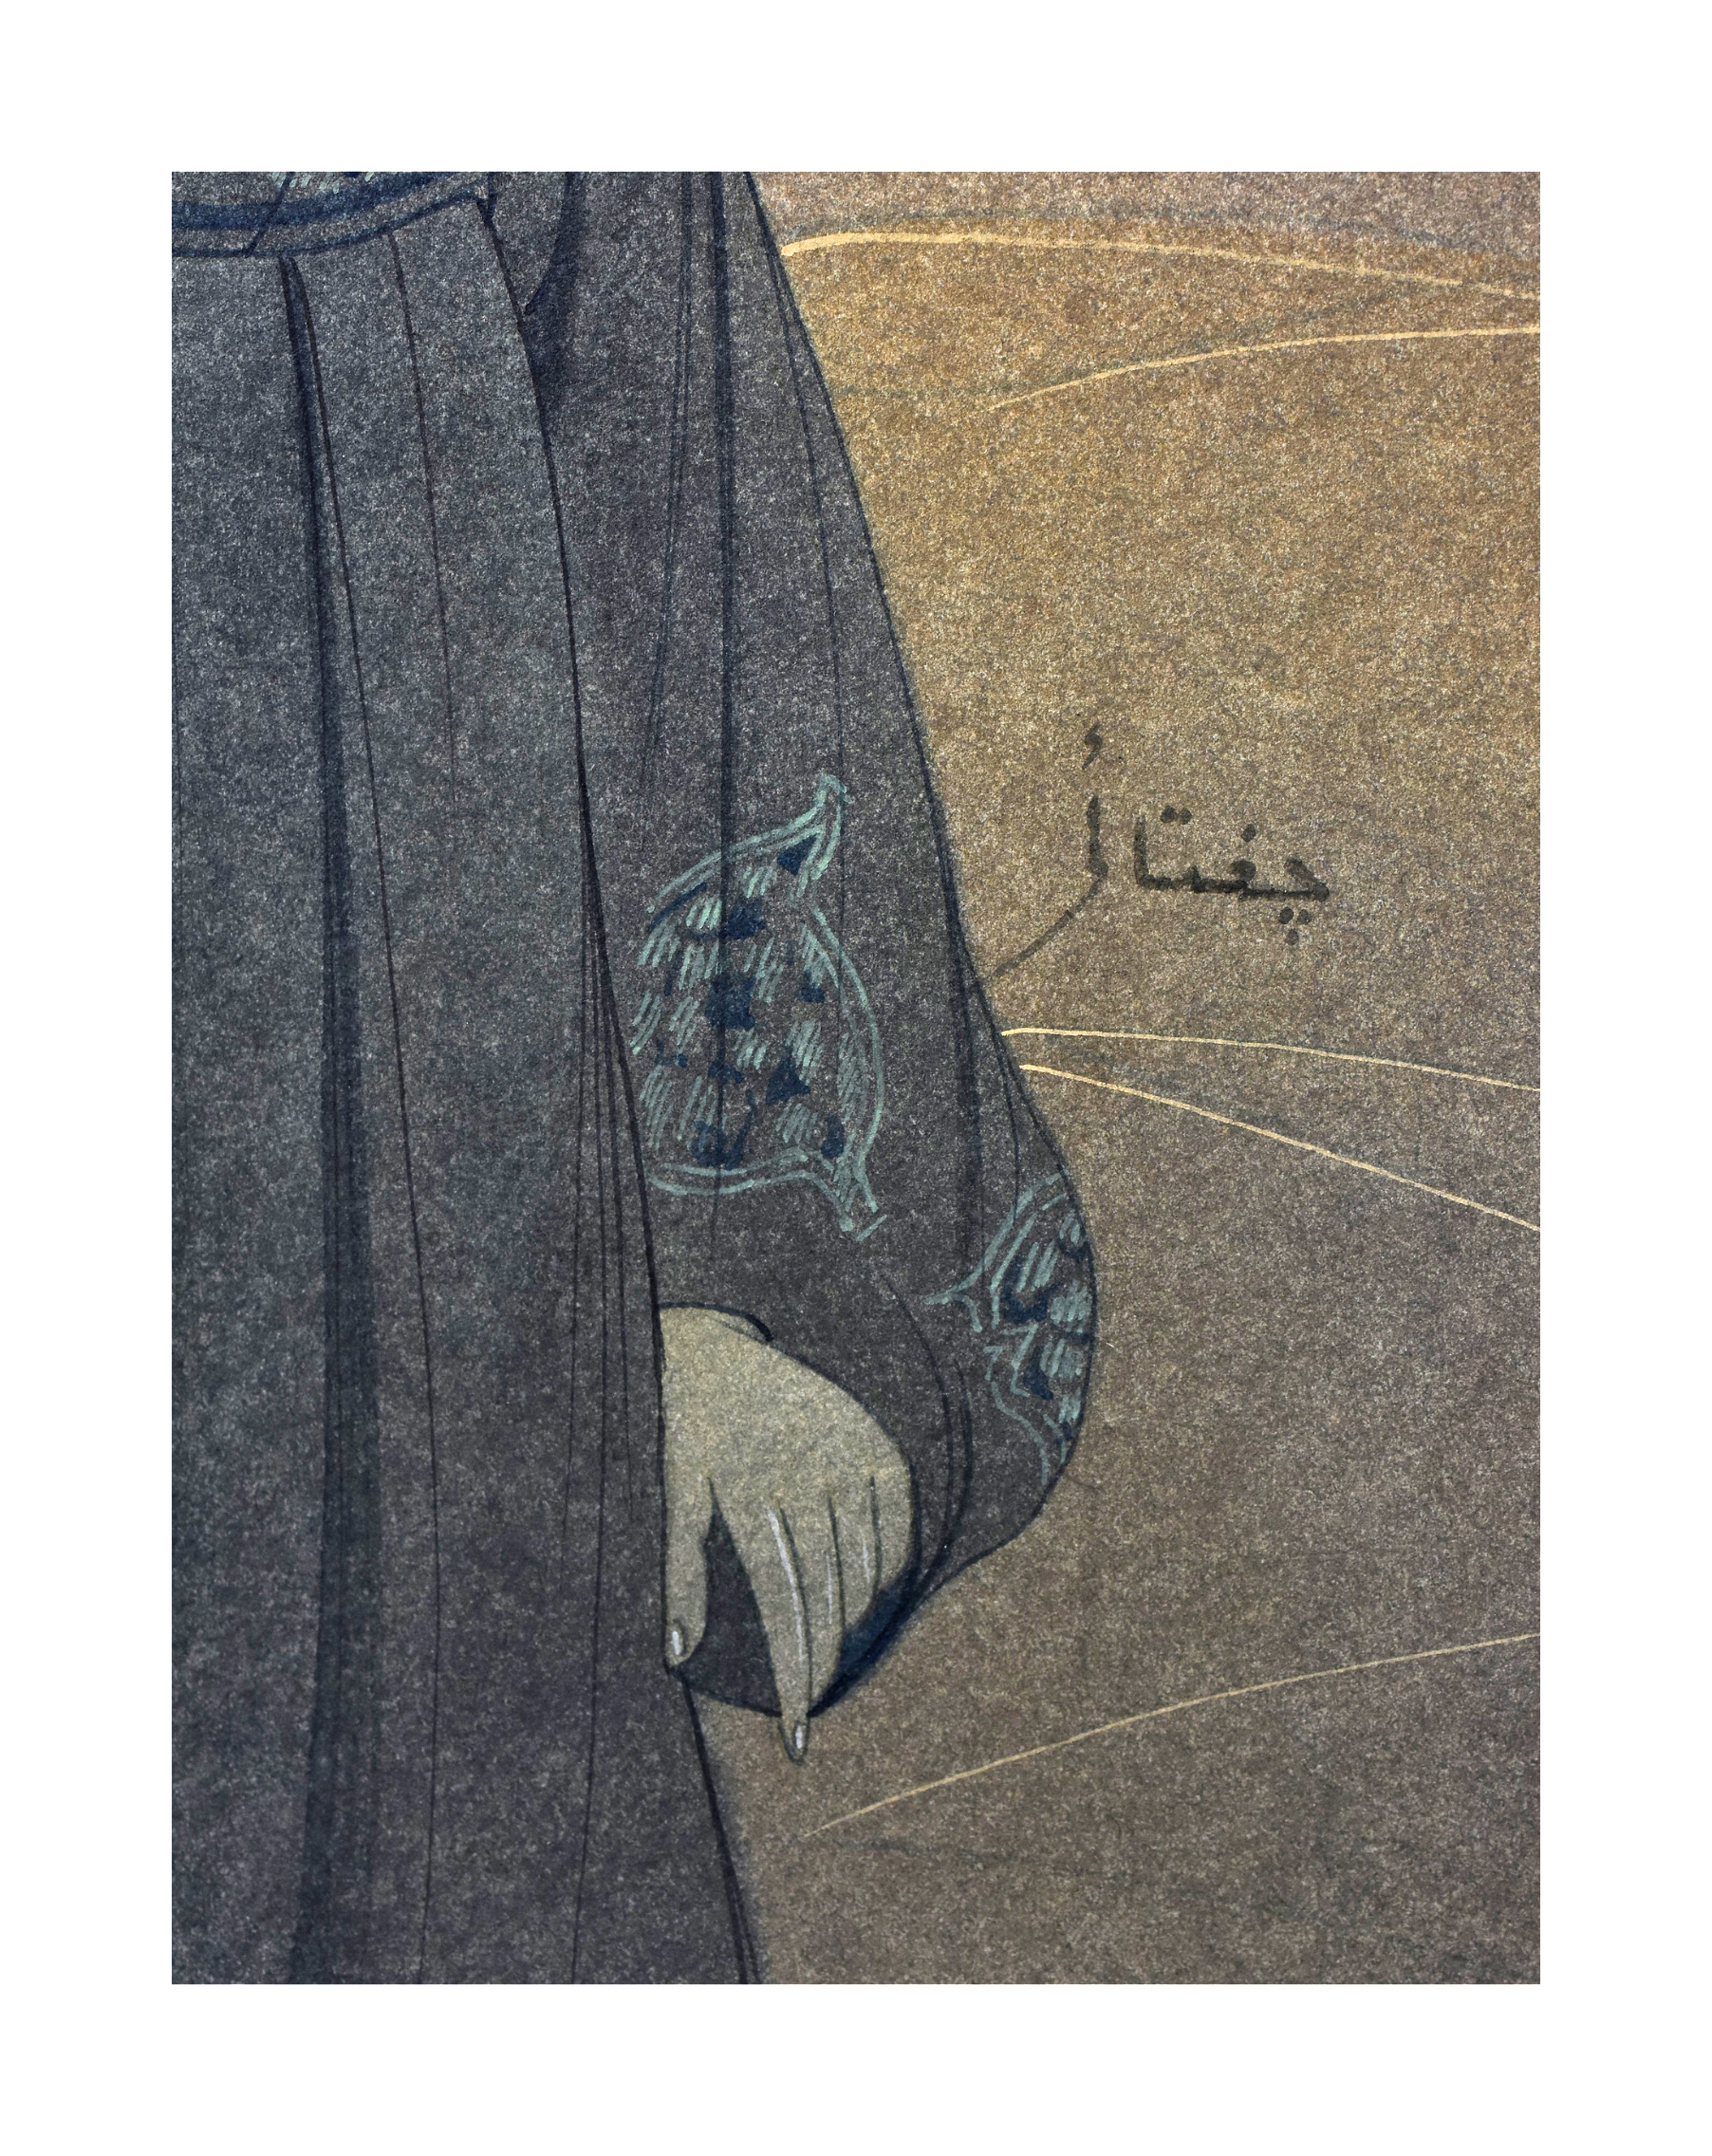 ABDUR RAHMAN CHUGHTAI (1897-1975) LAILA-MANJI SERIES, SIGNED BOTTOM RIGHT, WATERCOLUR ON PAPER - Image 9 of 10